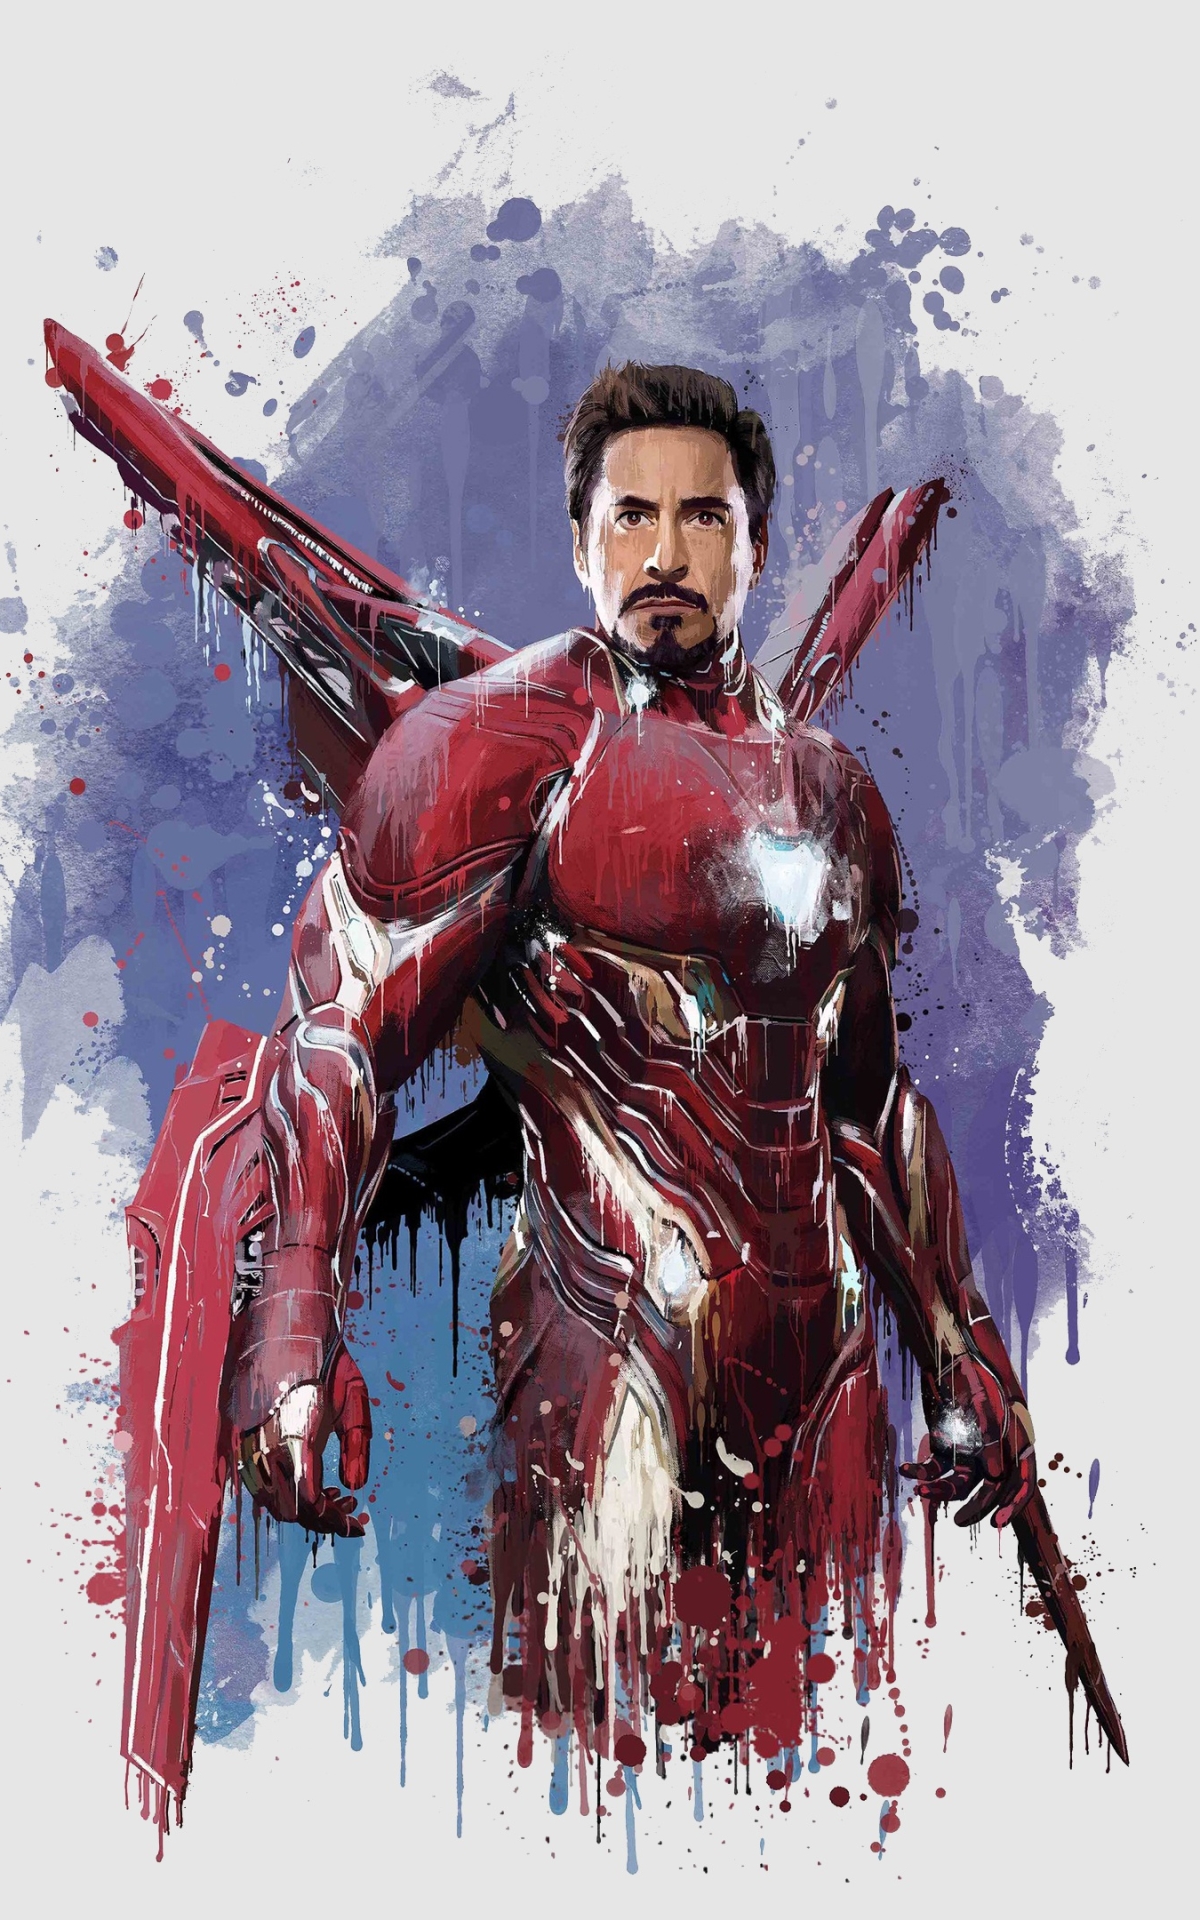 Handy-Wallpaper Robert Downey Jr, Filme, Ironman, Die Rächer, Avengers: Infinity War kostenlos herunterladen.